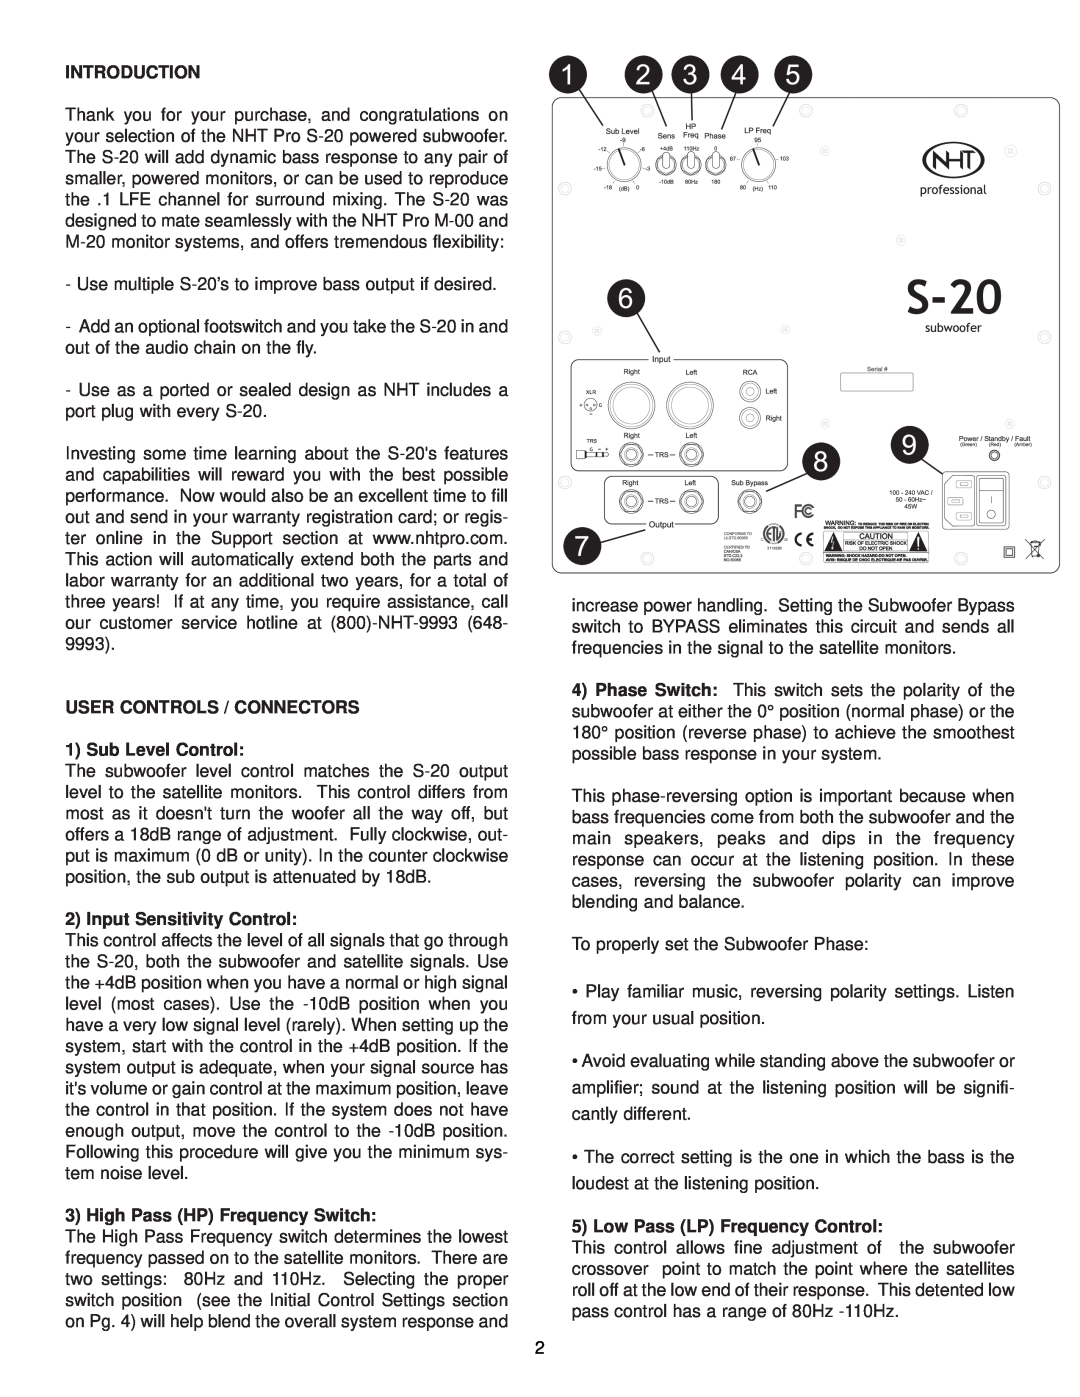 NHT S-20 owner manual Introduction, USER CONTROLS / CONNECTORS 1 Sub Level Control, Input Sensitivity Control 